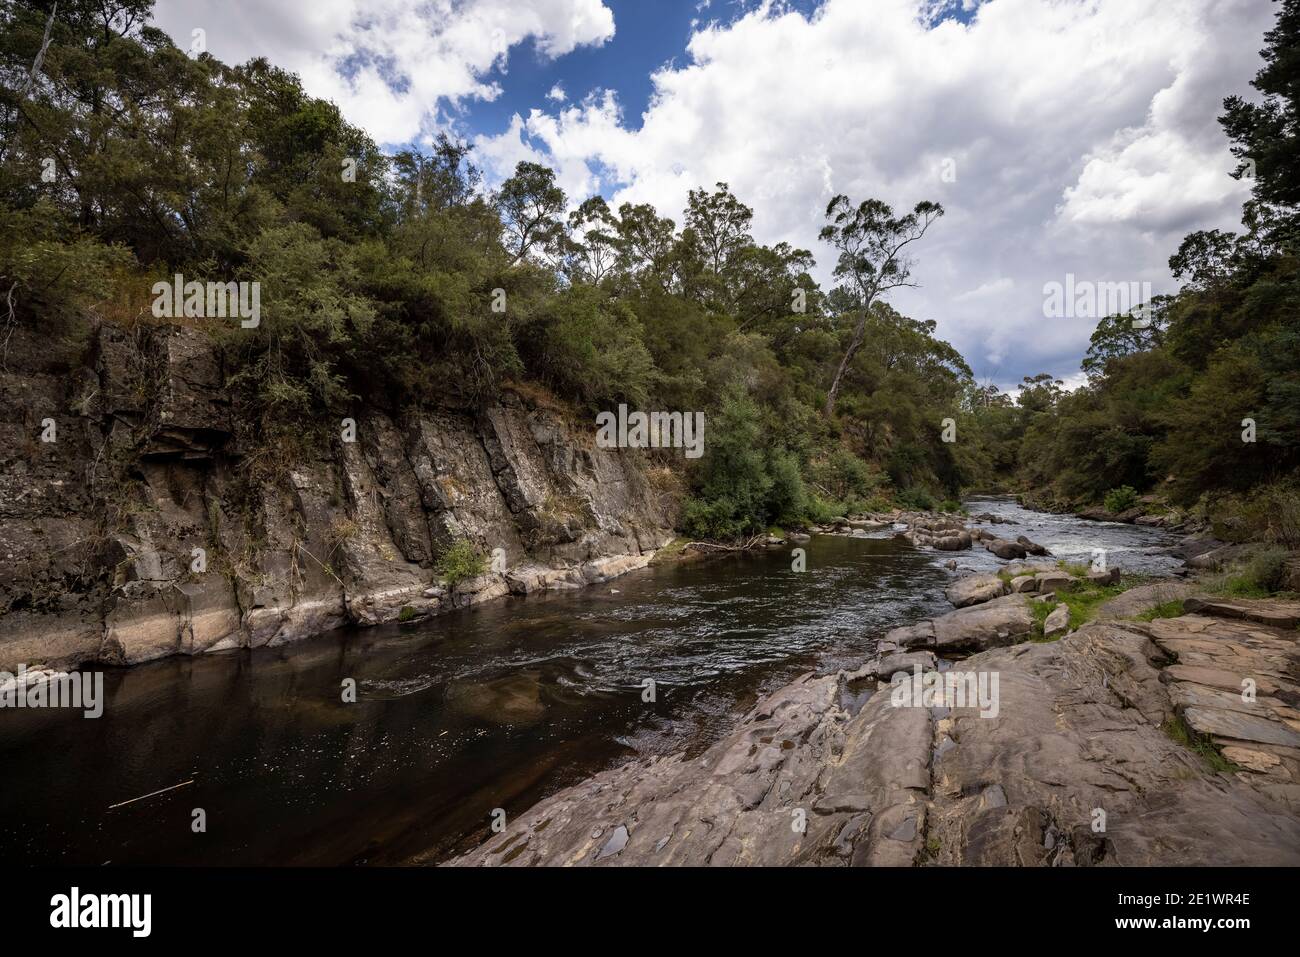 Canyon Walk, a hiking trail in Bright, Victoria, Australia Stock Photo